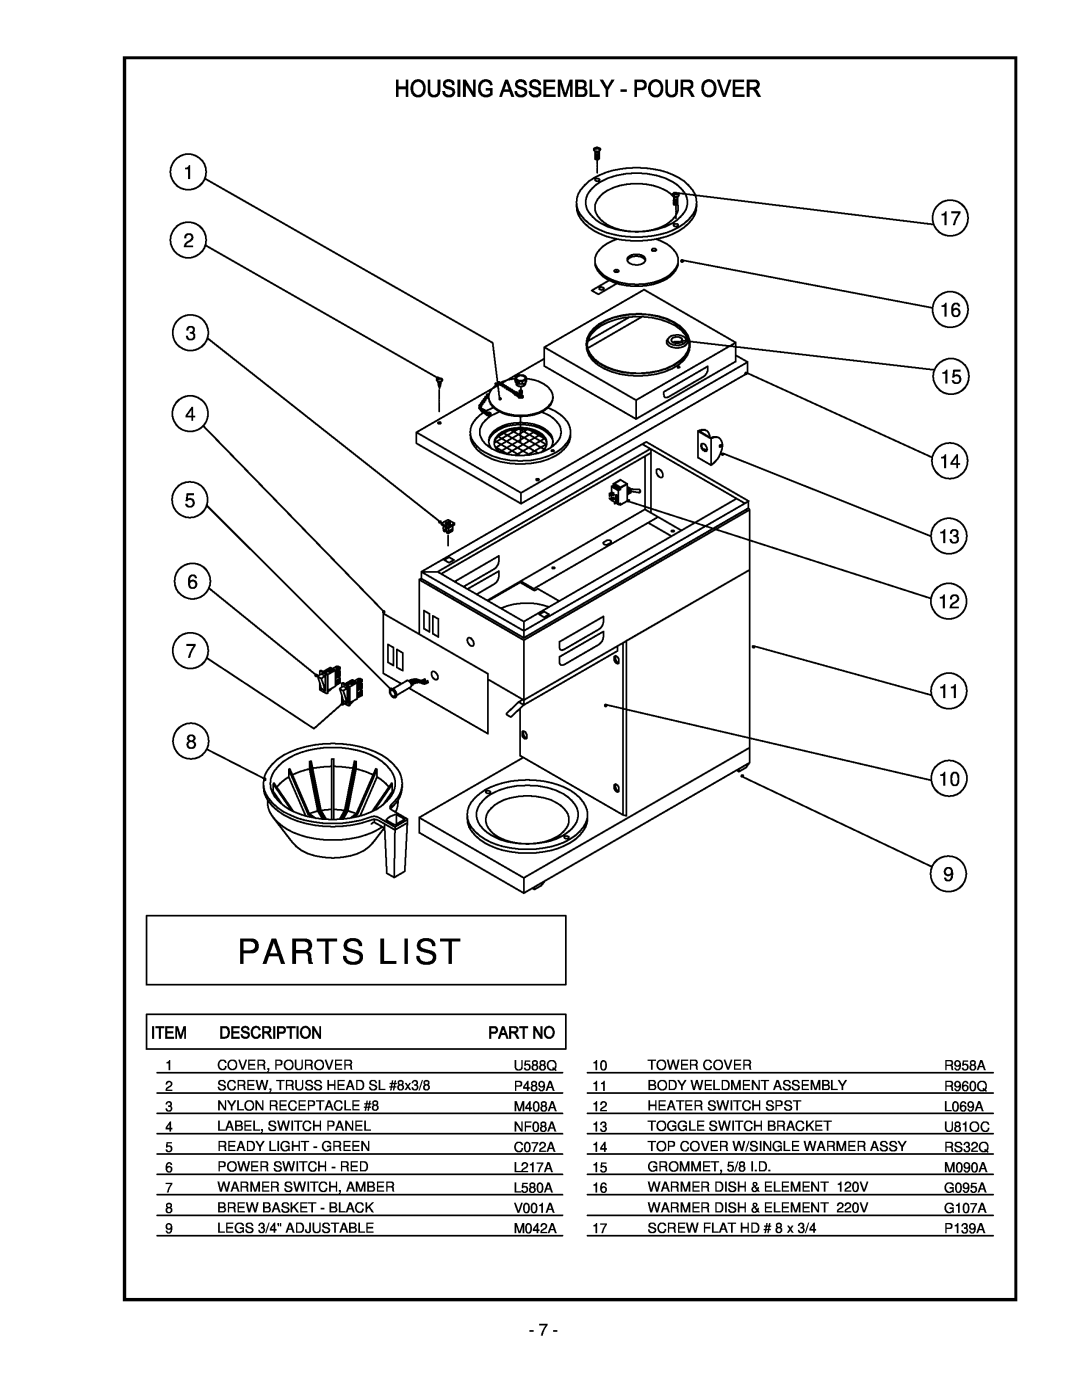 Cecilware 2000 manual Parts List, 1 2 3, 17 16 15 